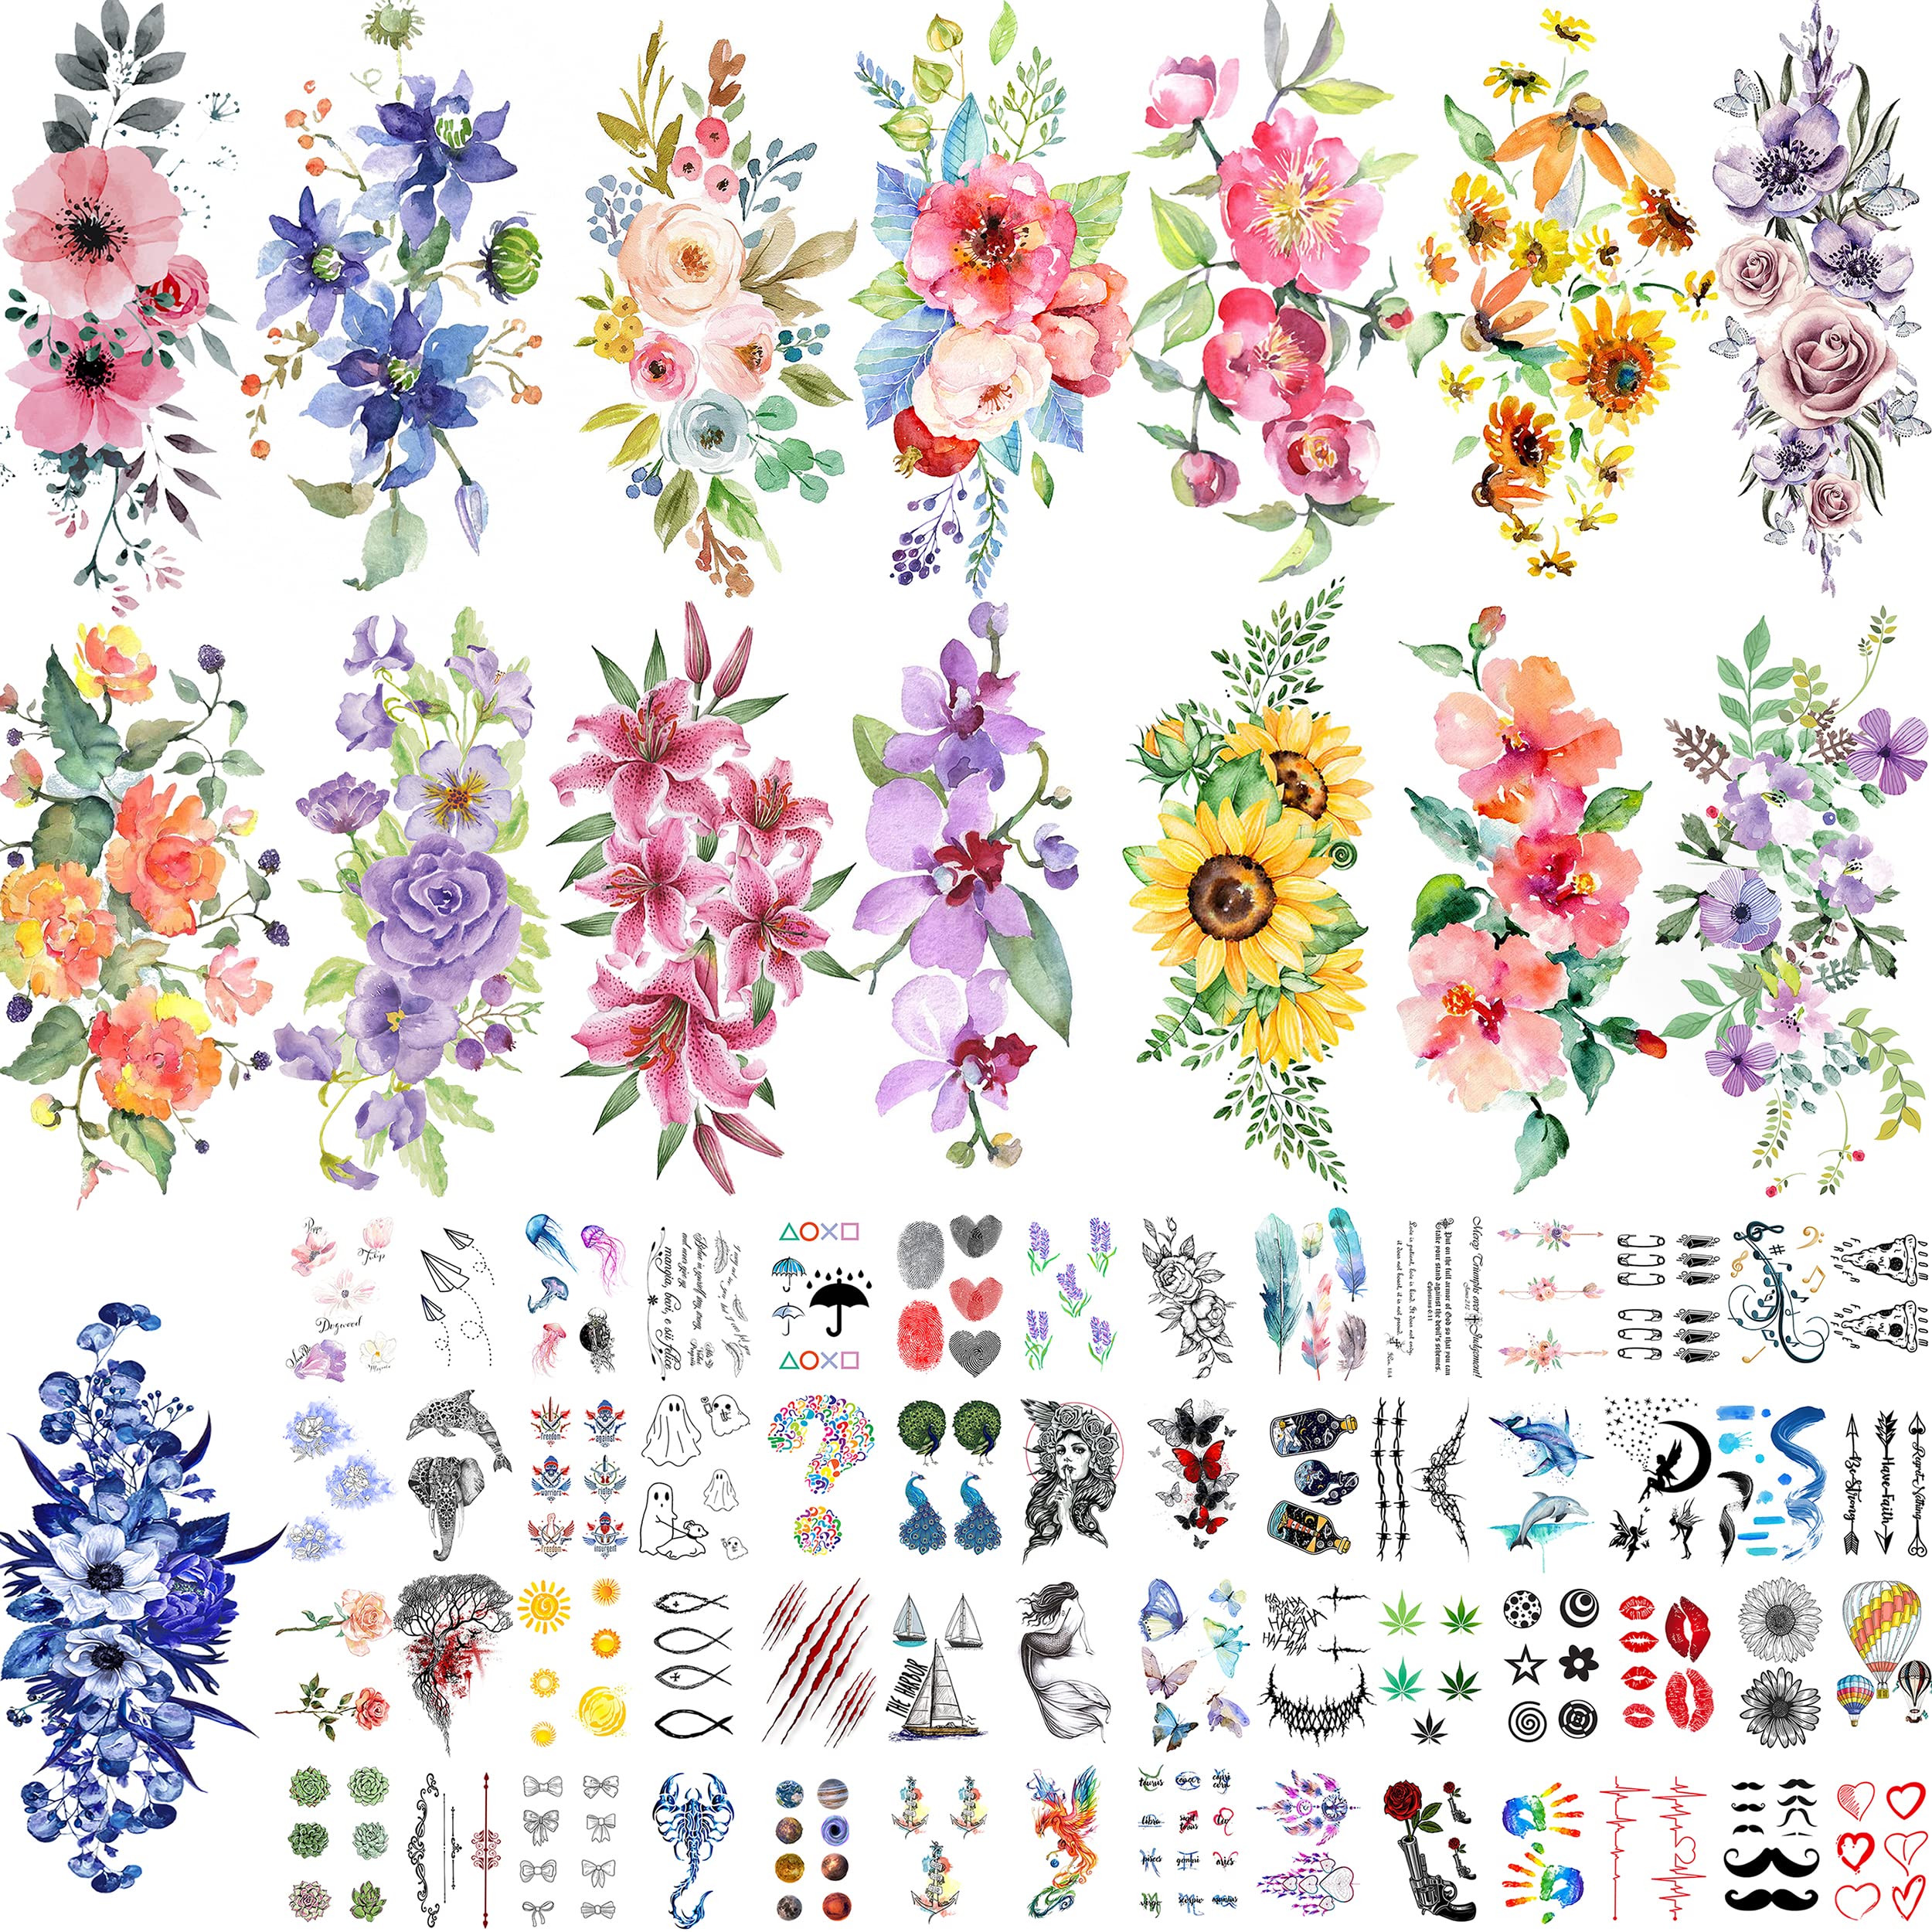 Flowers tattoo by Bekker Konstantin | Post 22969